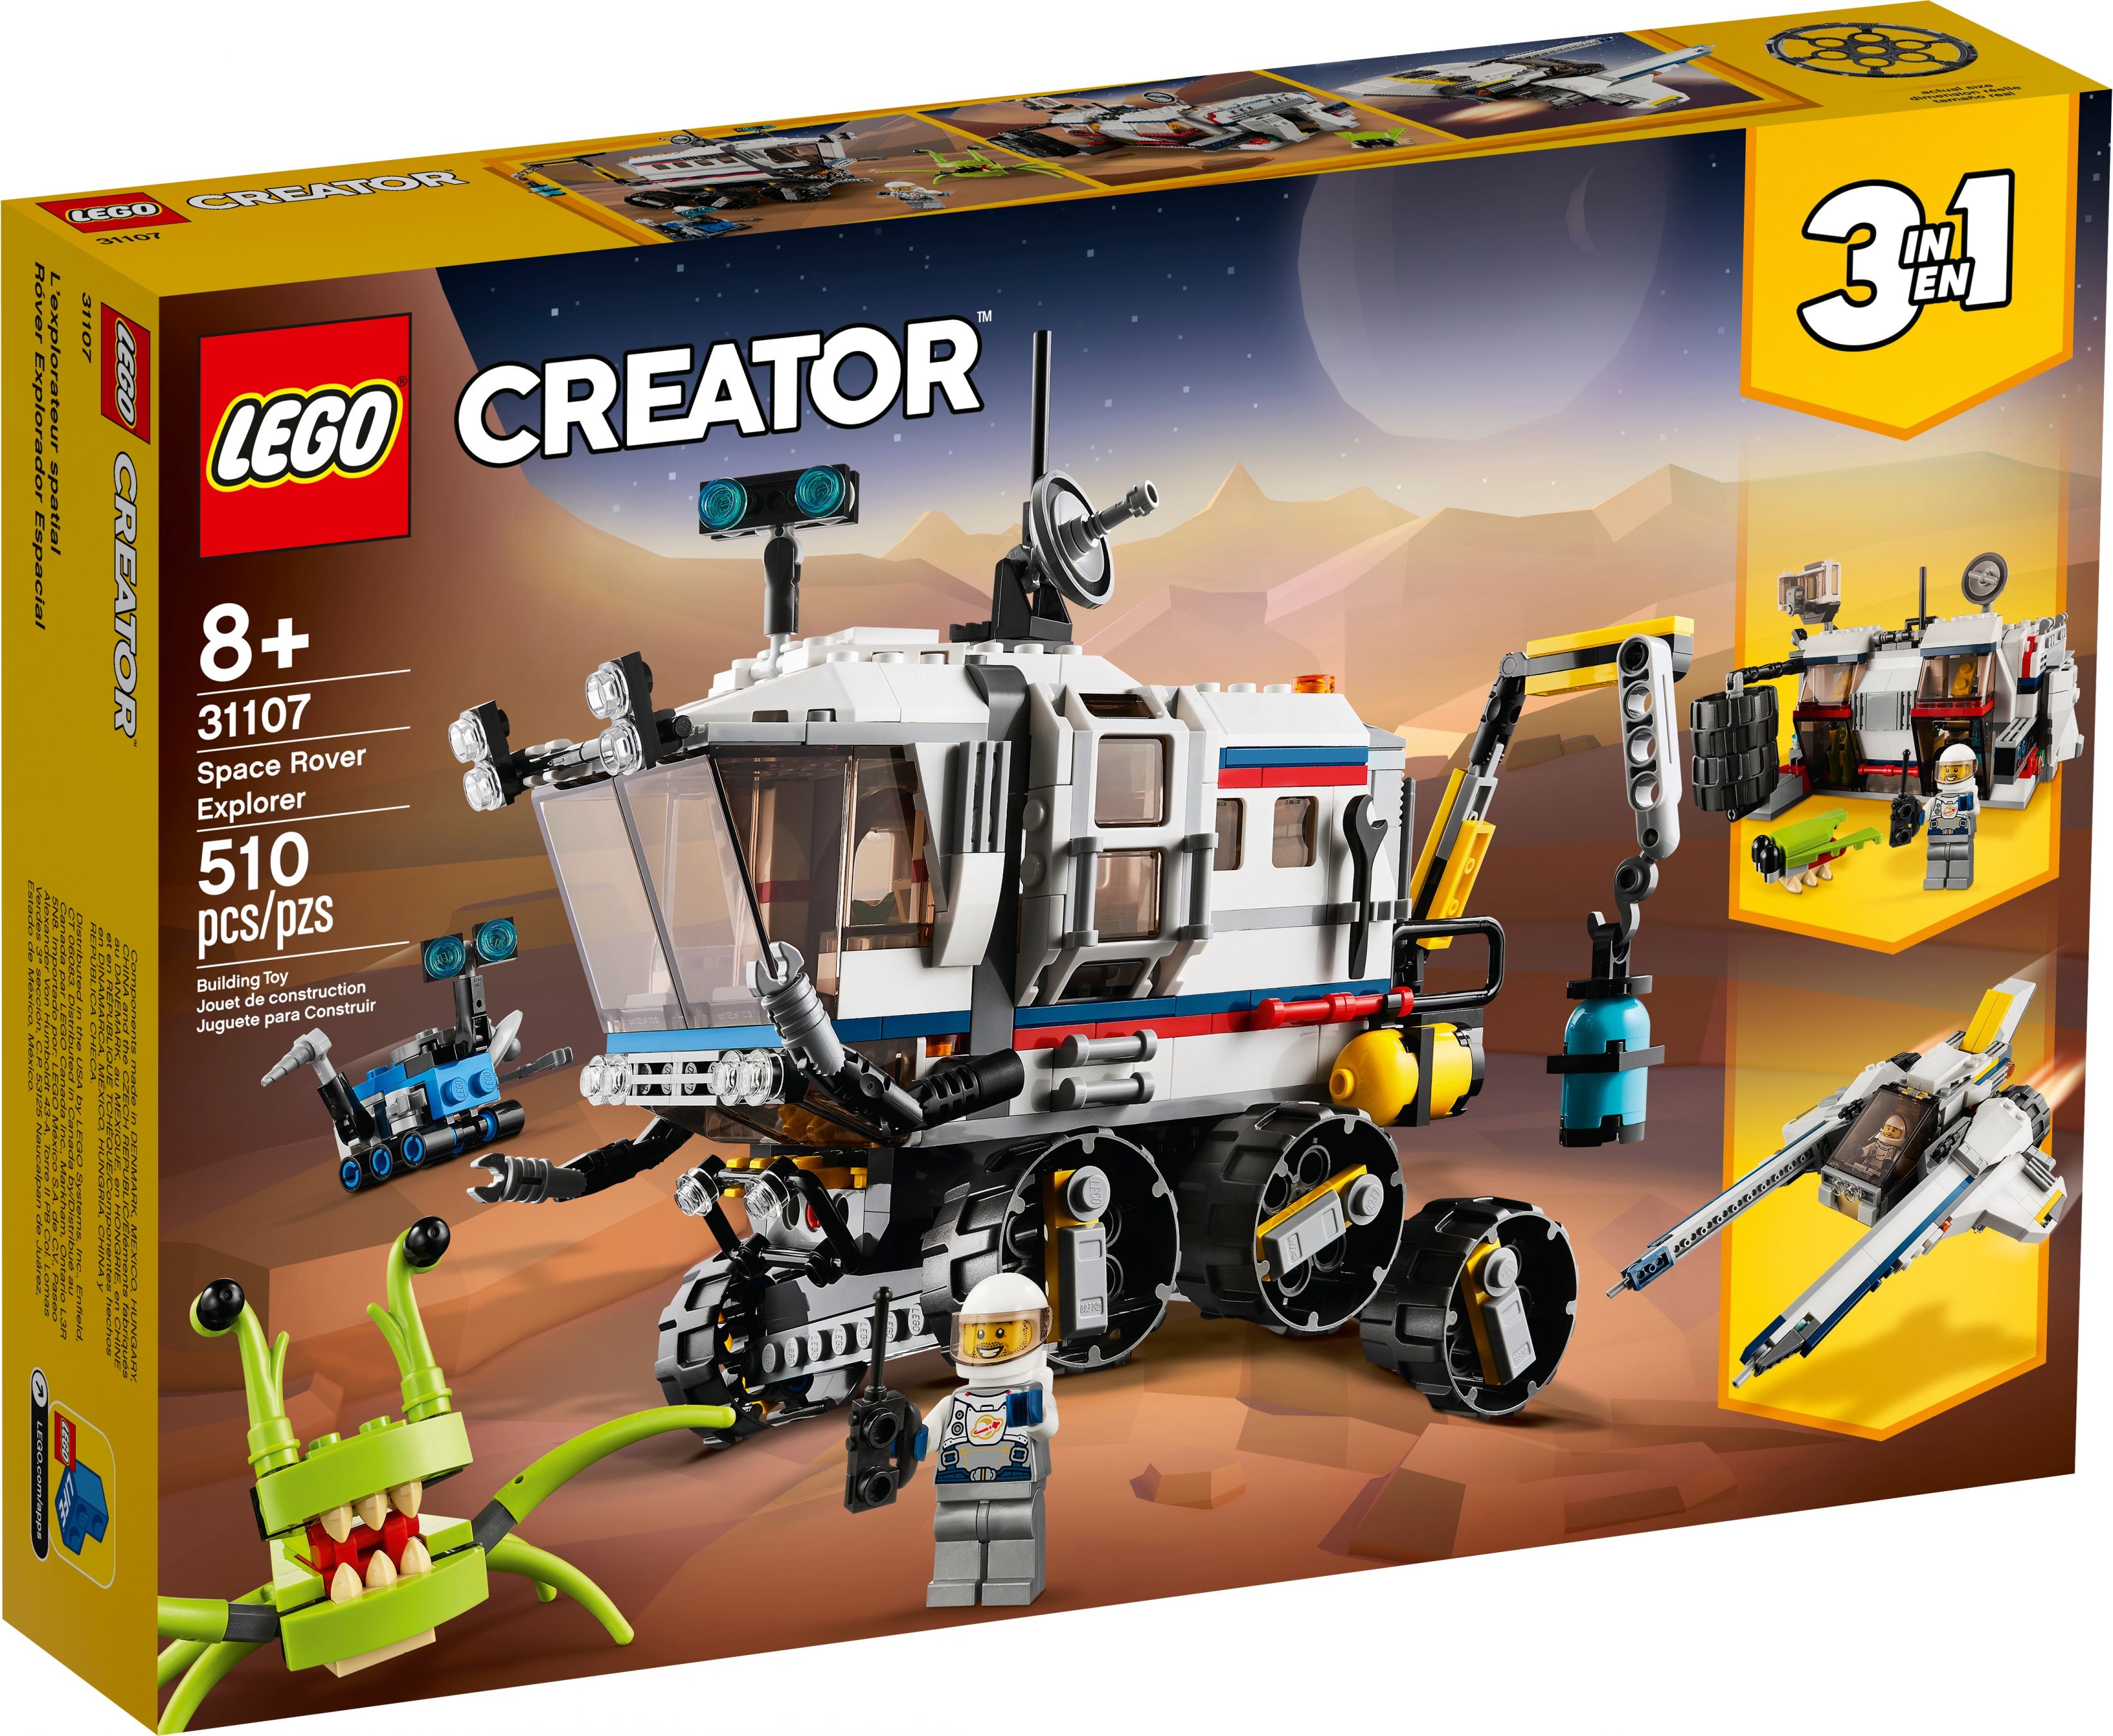 LEGO Creator 31107 Rover LEGO_31107_alt1.jpg